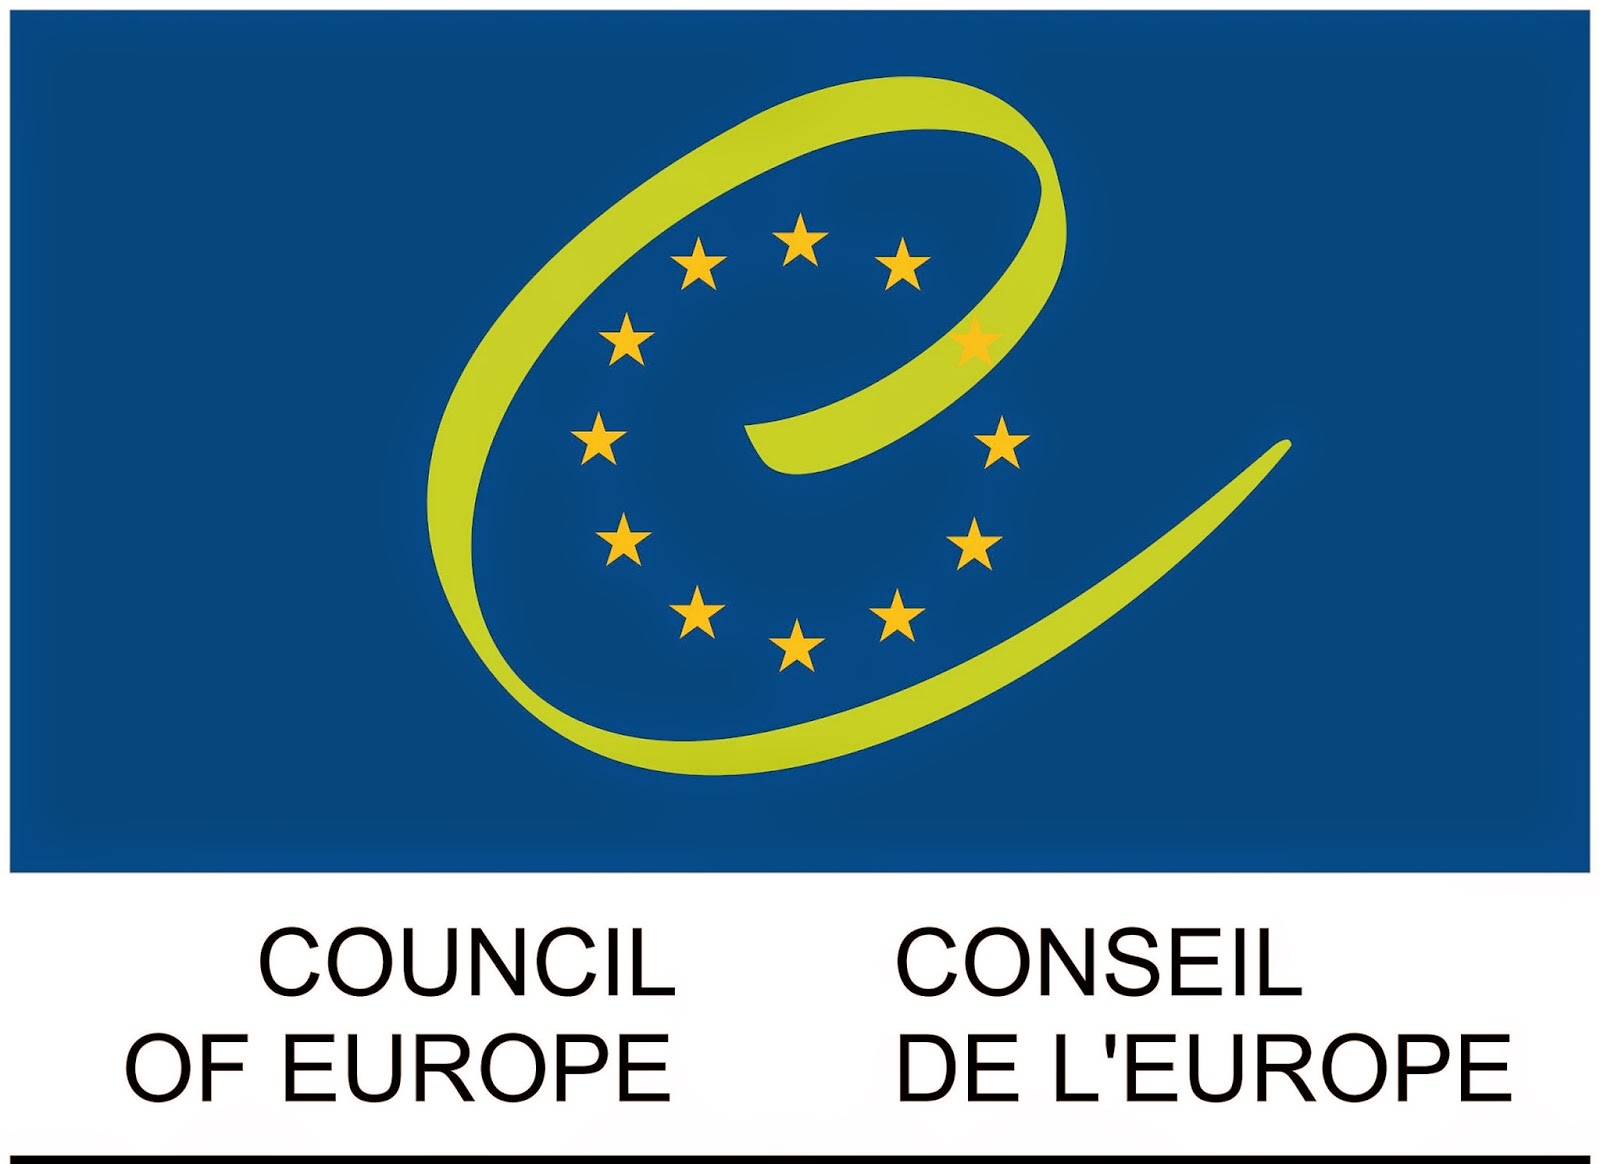 council of europe logo война 2008 война 2008